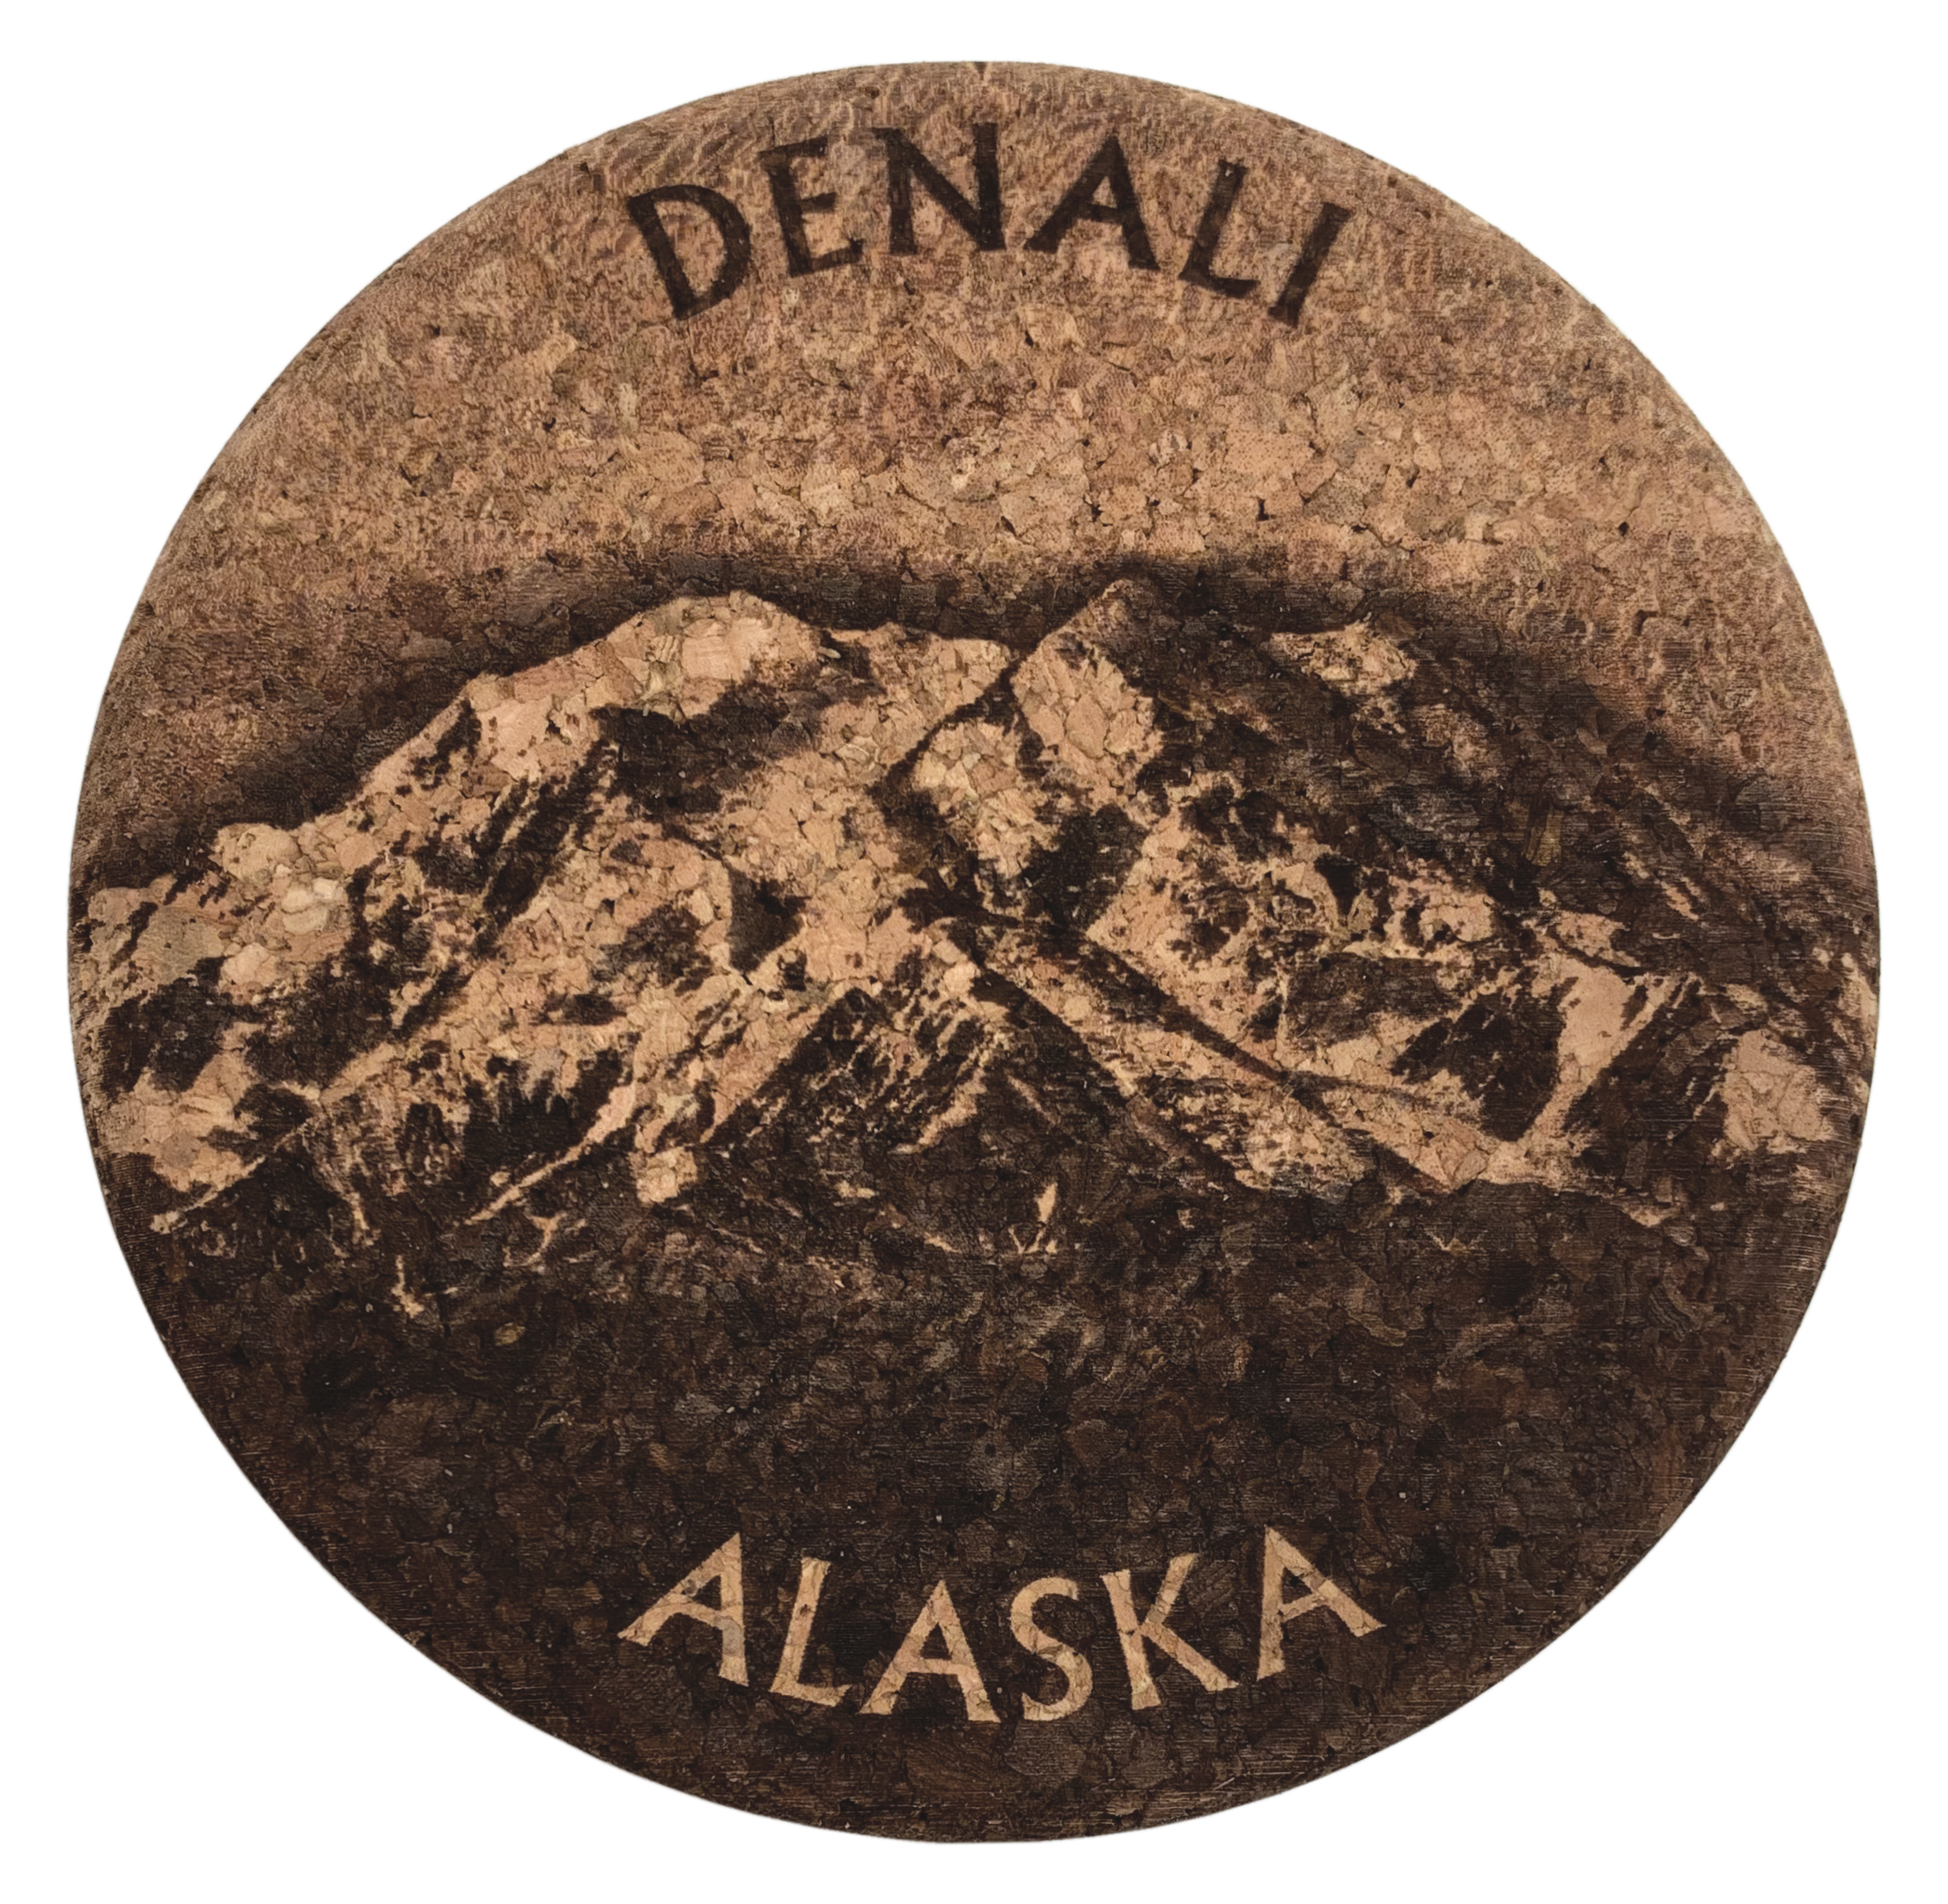 Denali Alaska Cork Coaster